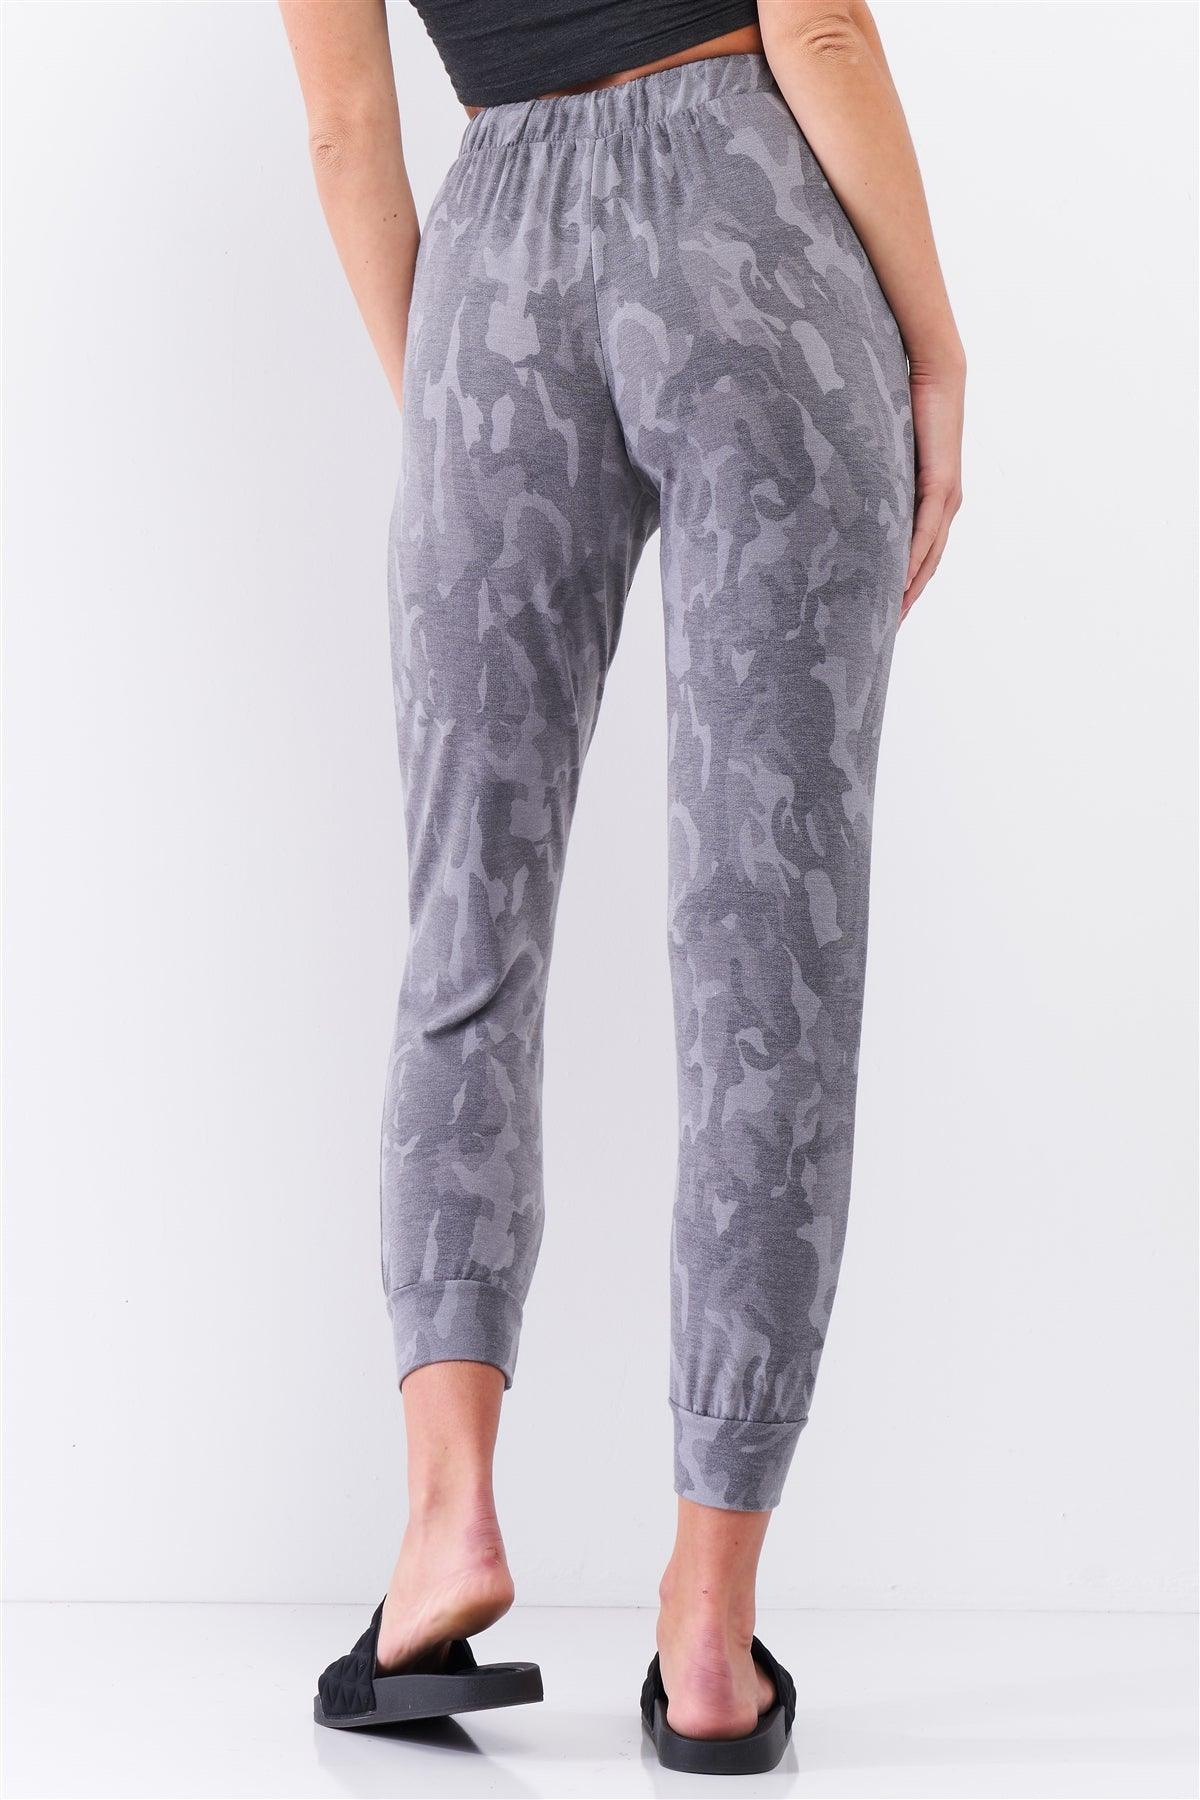 Grey Camo Print Loose Fit High-Waisted Elasticated Self-Tie Drawstring Waistline Track Pants /3-2-1